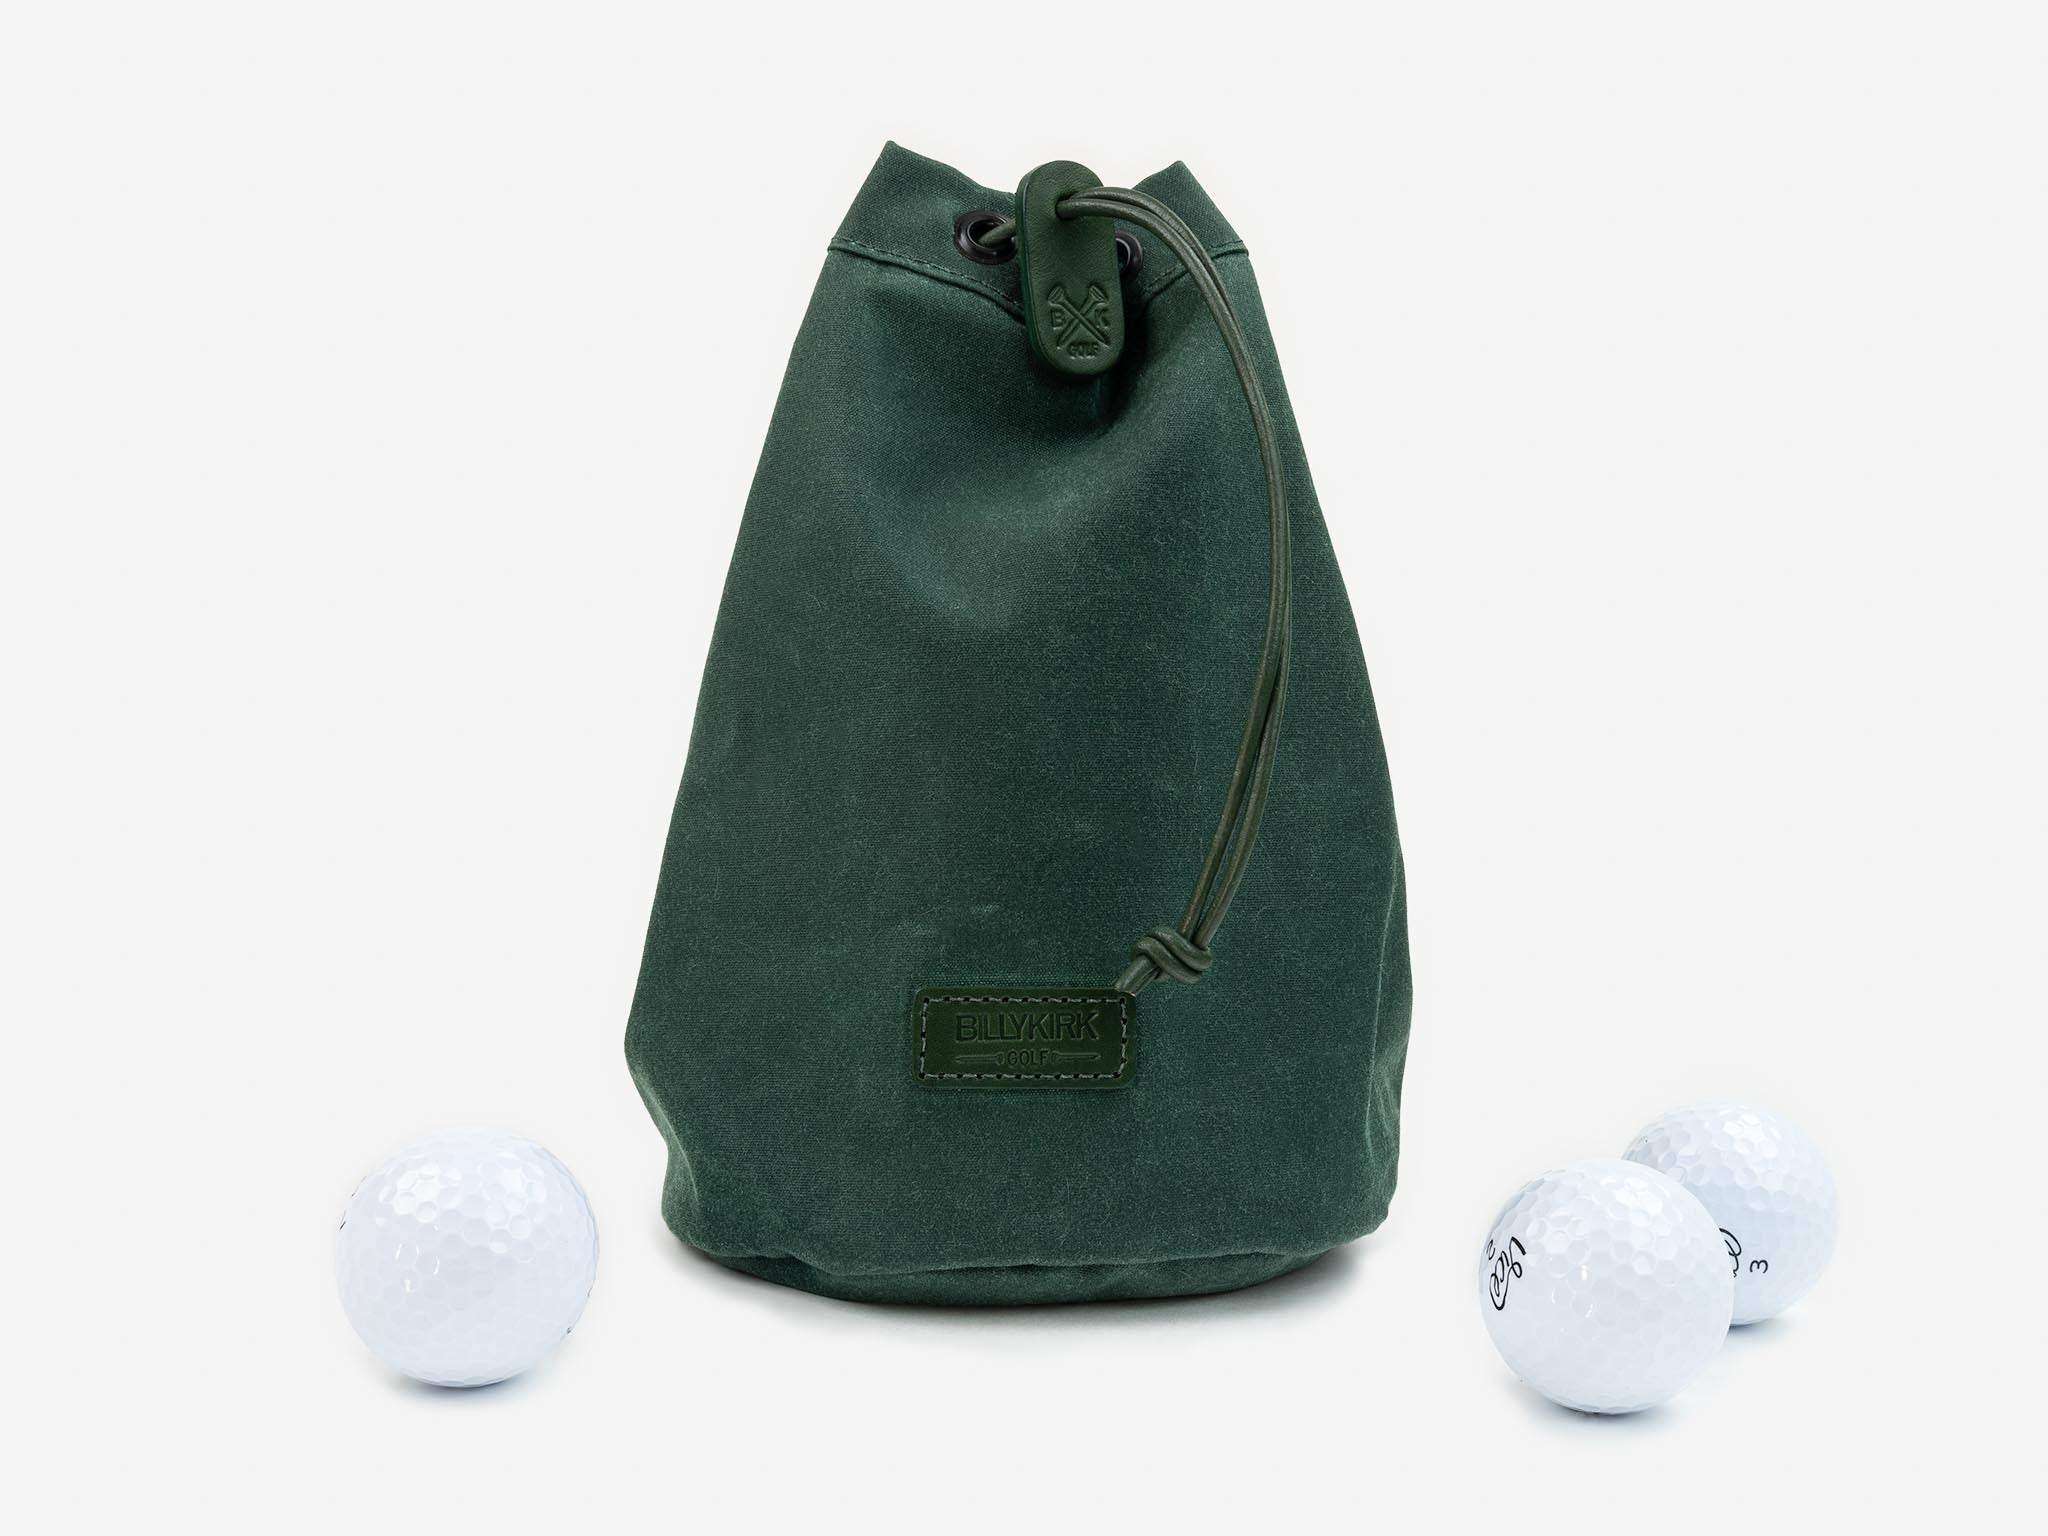 Golf Ball Shag Bag